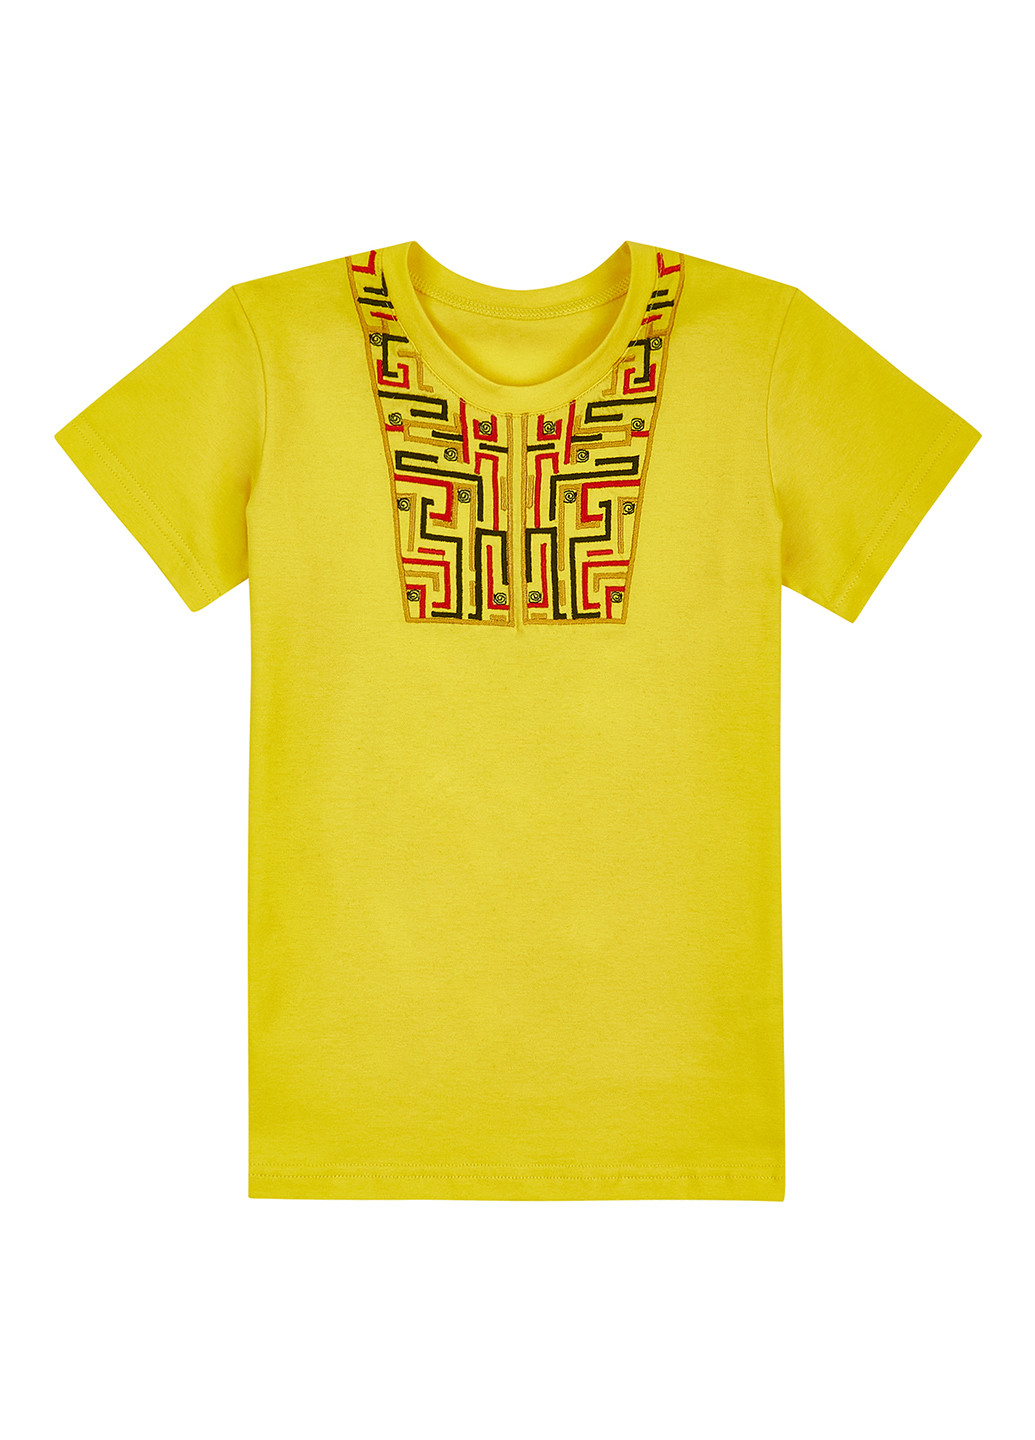 Желтая летняя футболка Garnamama